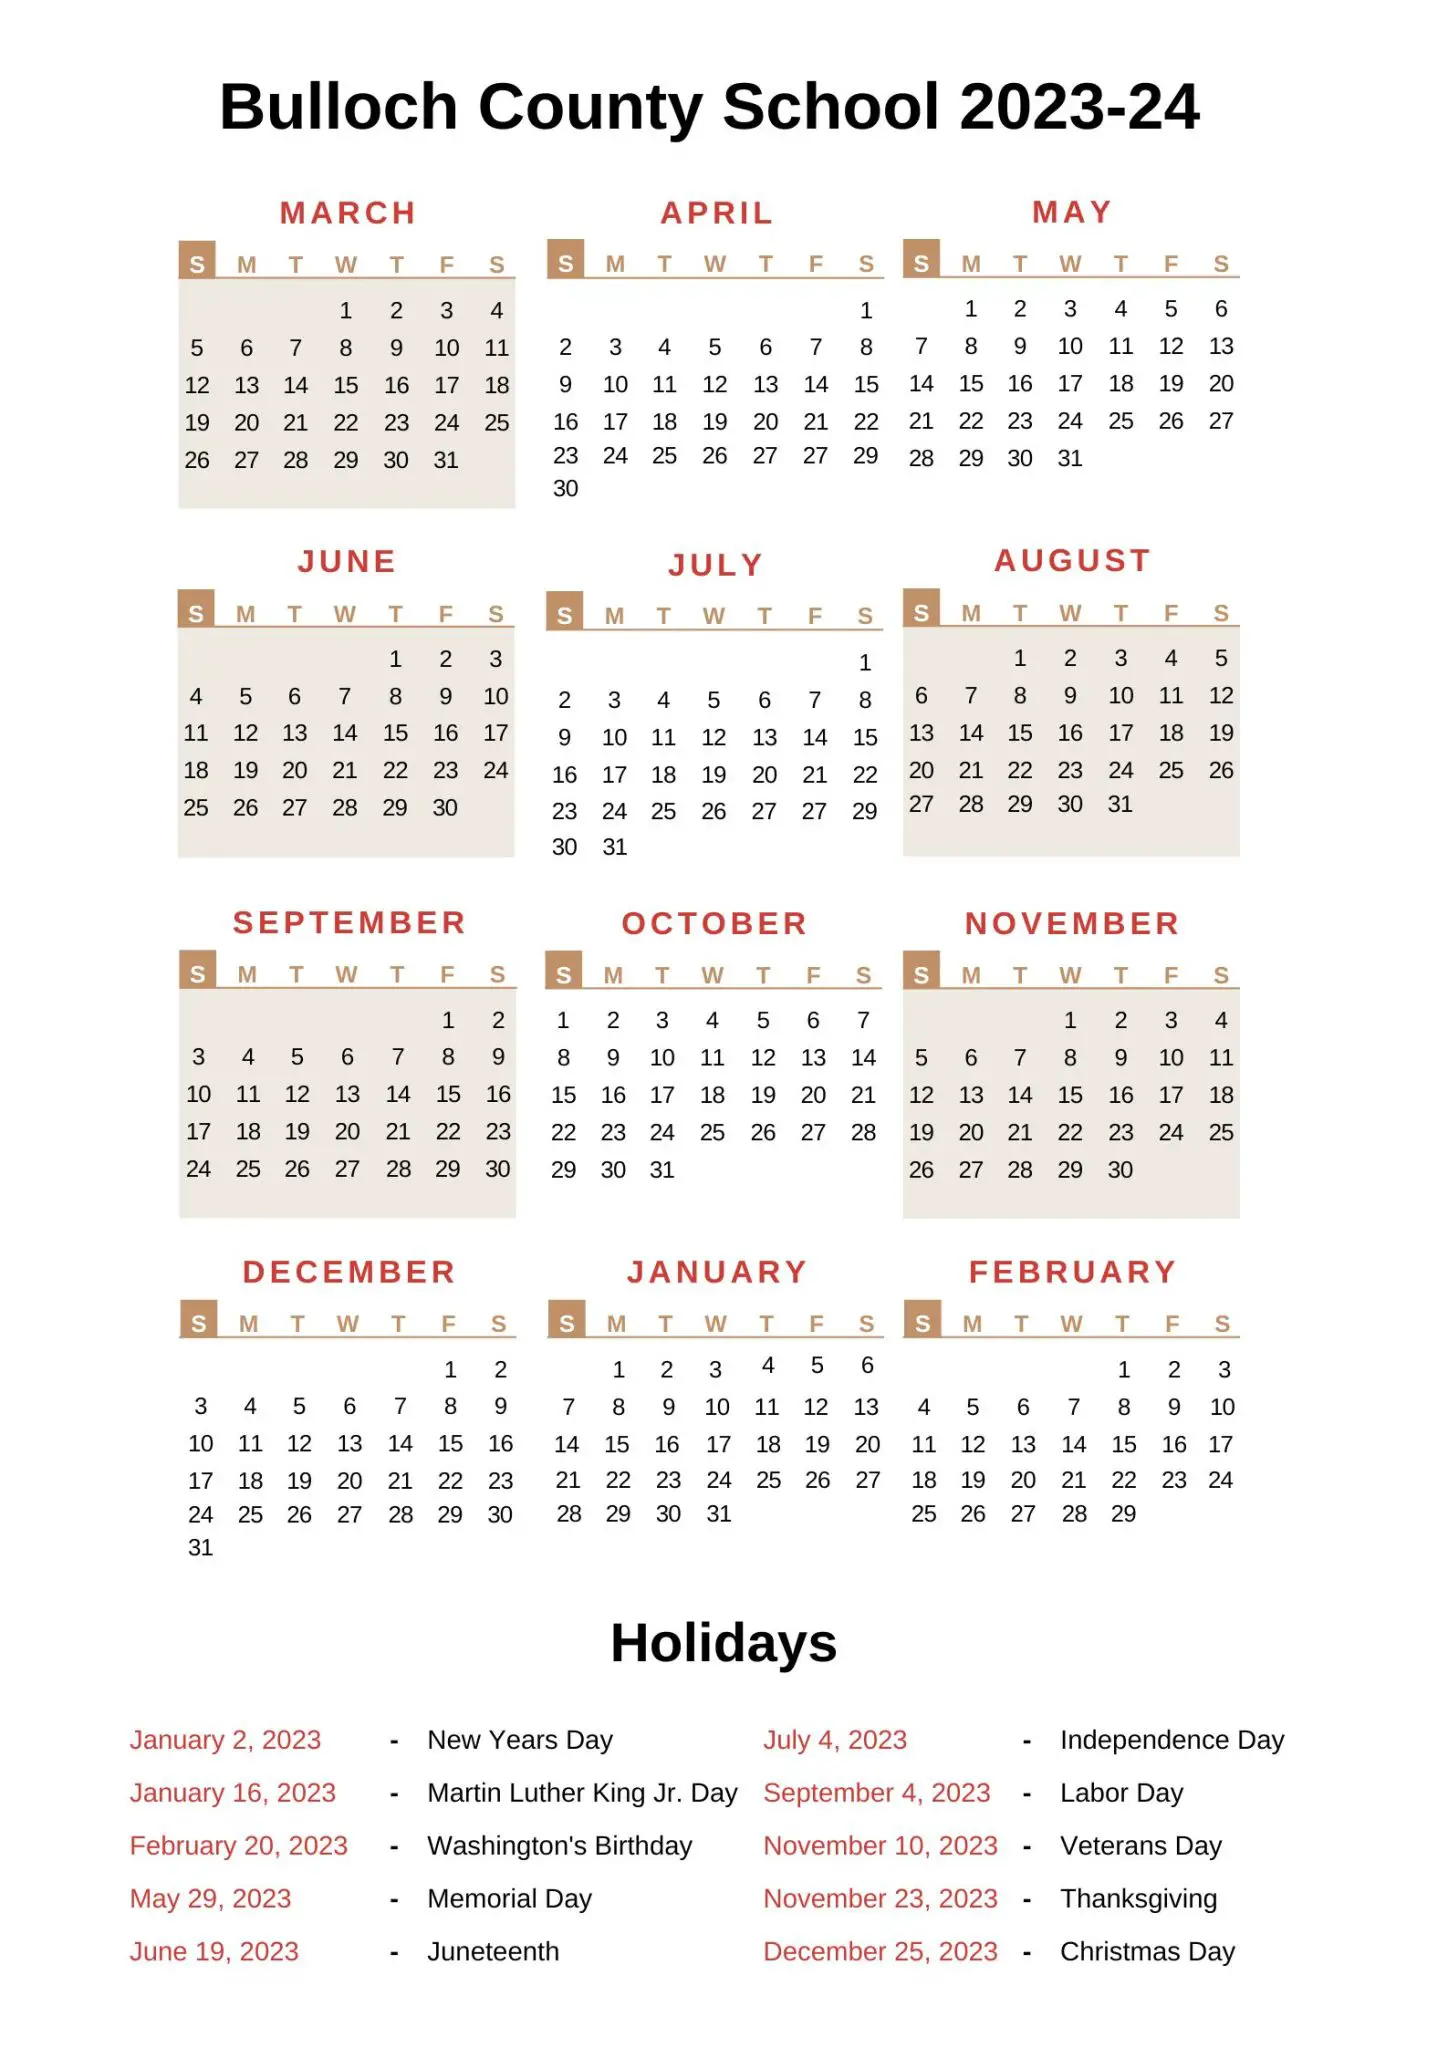 Bulloch County Schools Calendar [BCS] 202324 With Holidays